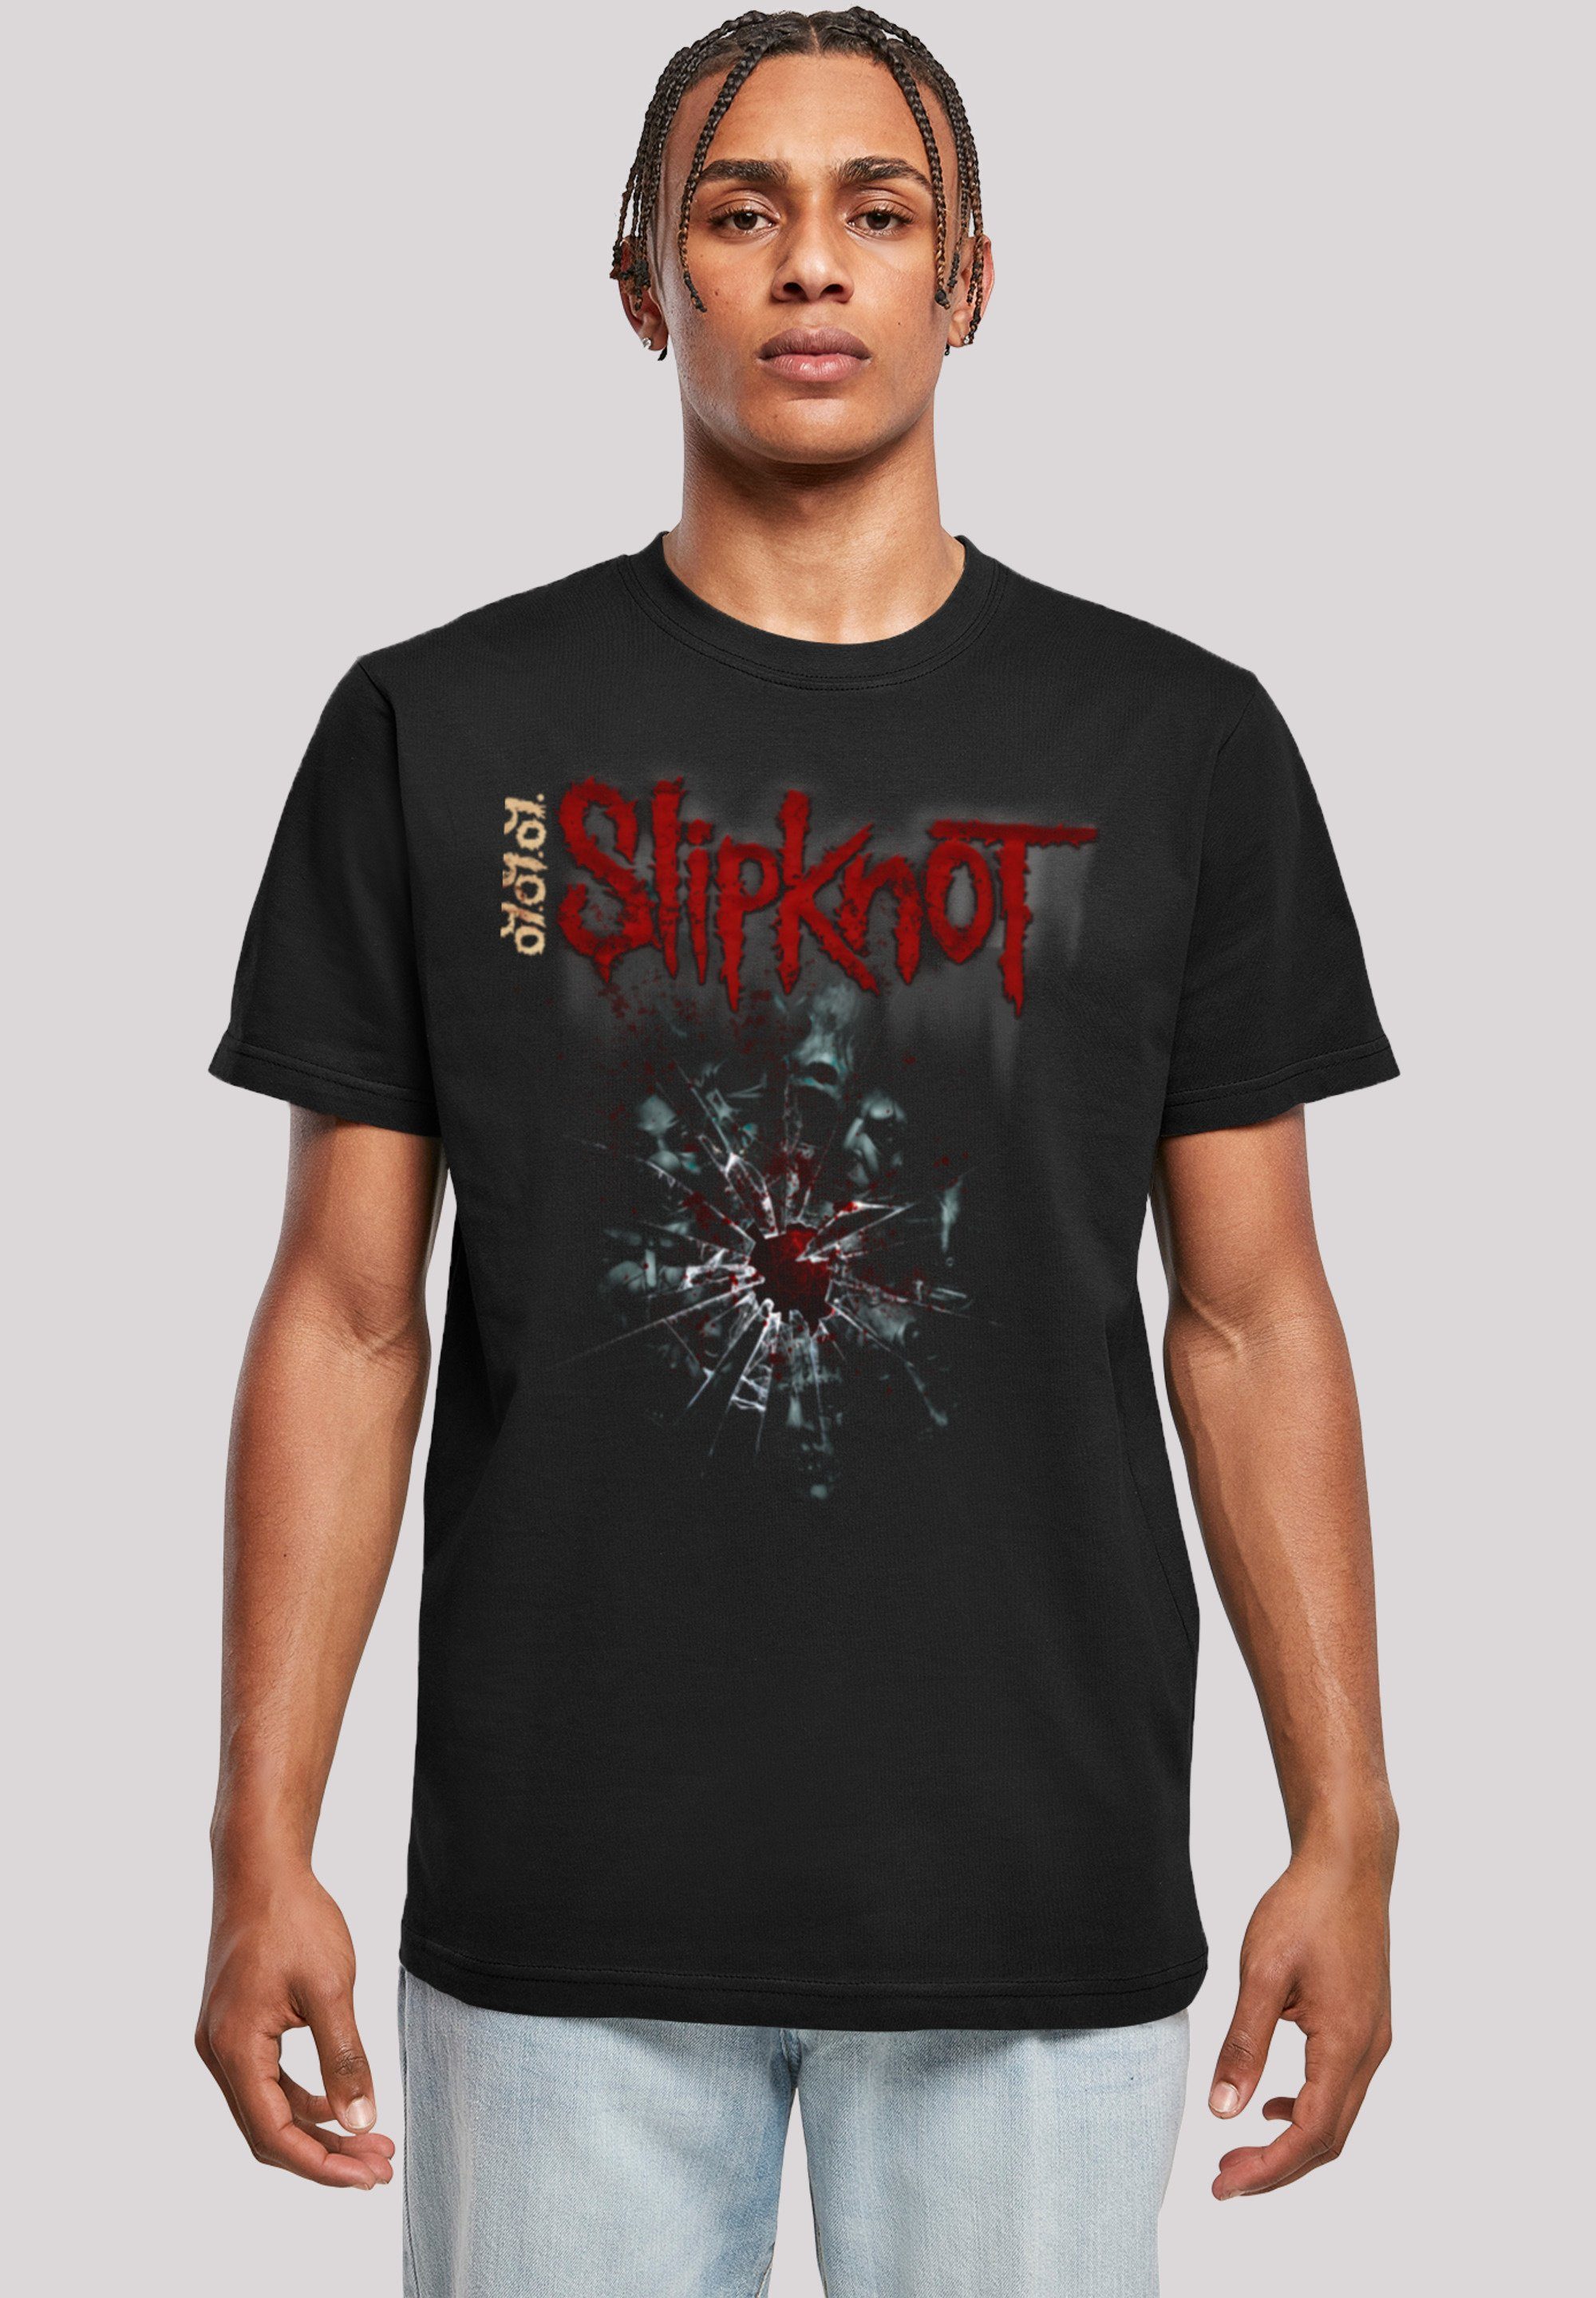 F4NT4STIC Print Metal T-Shirt Slipknot Band